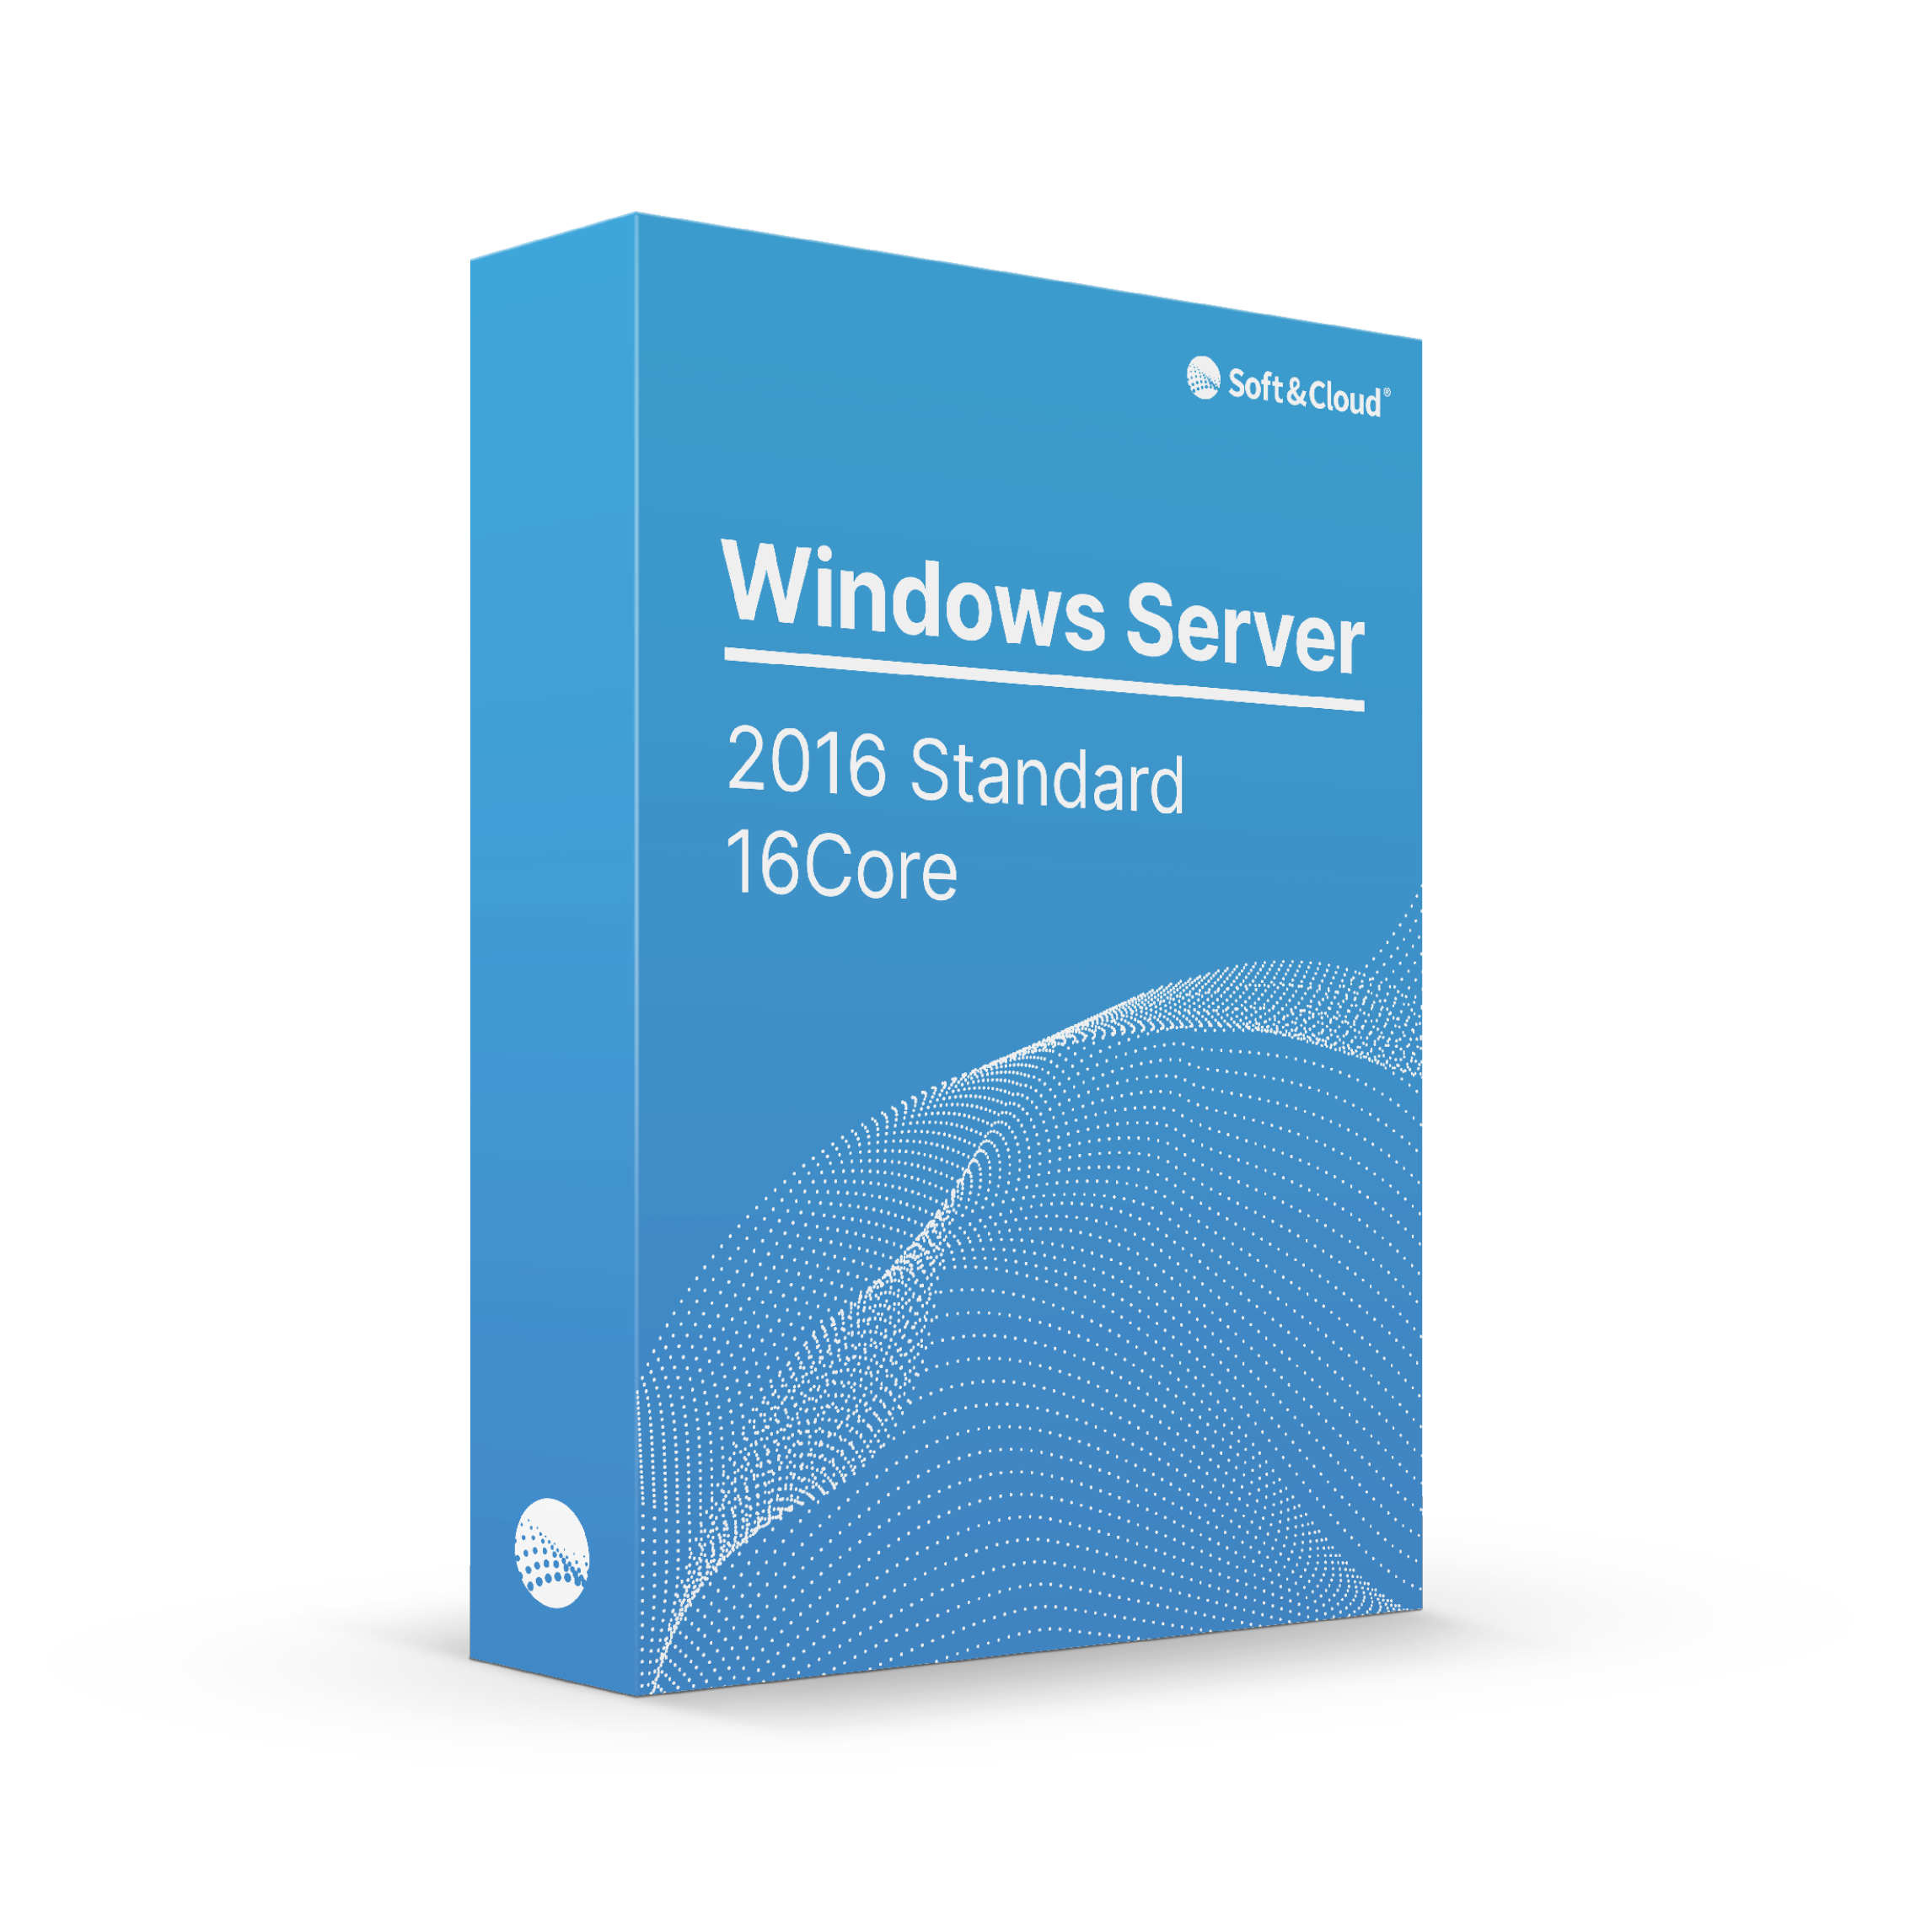 Windows Server 2016 Standard 16Core